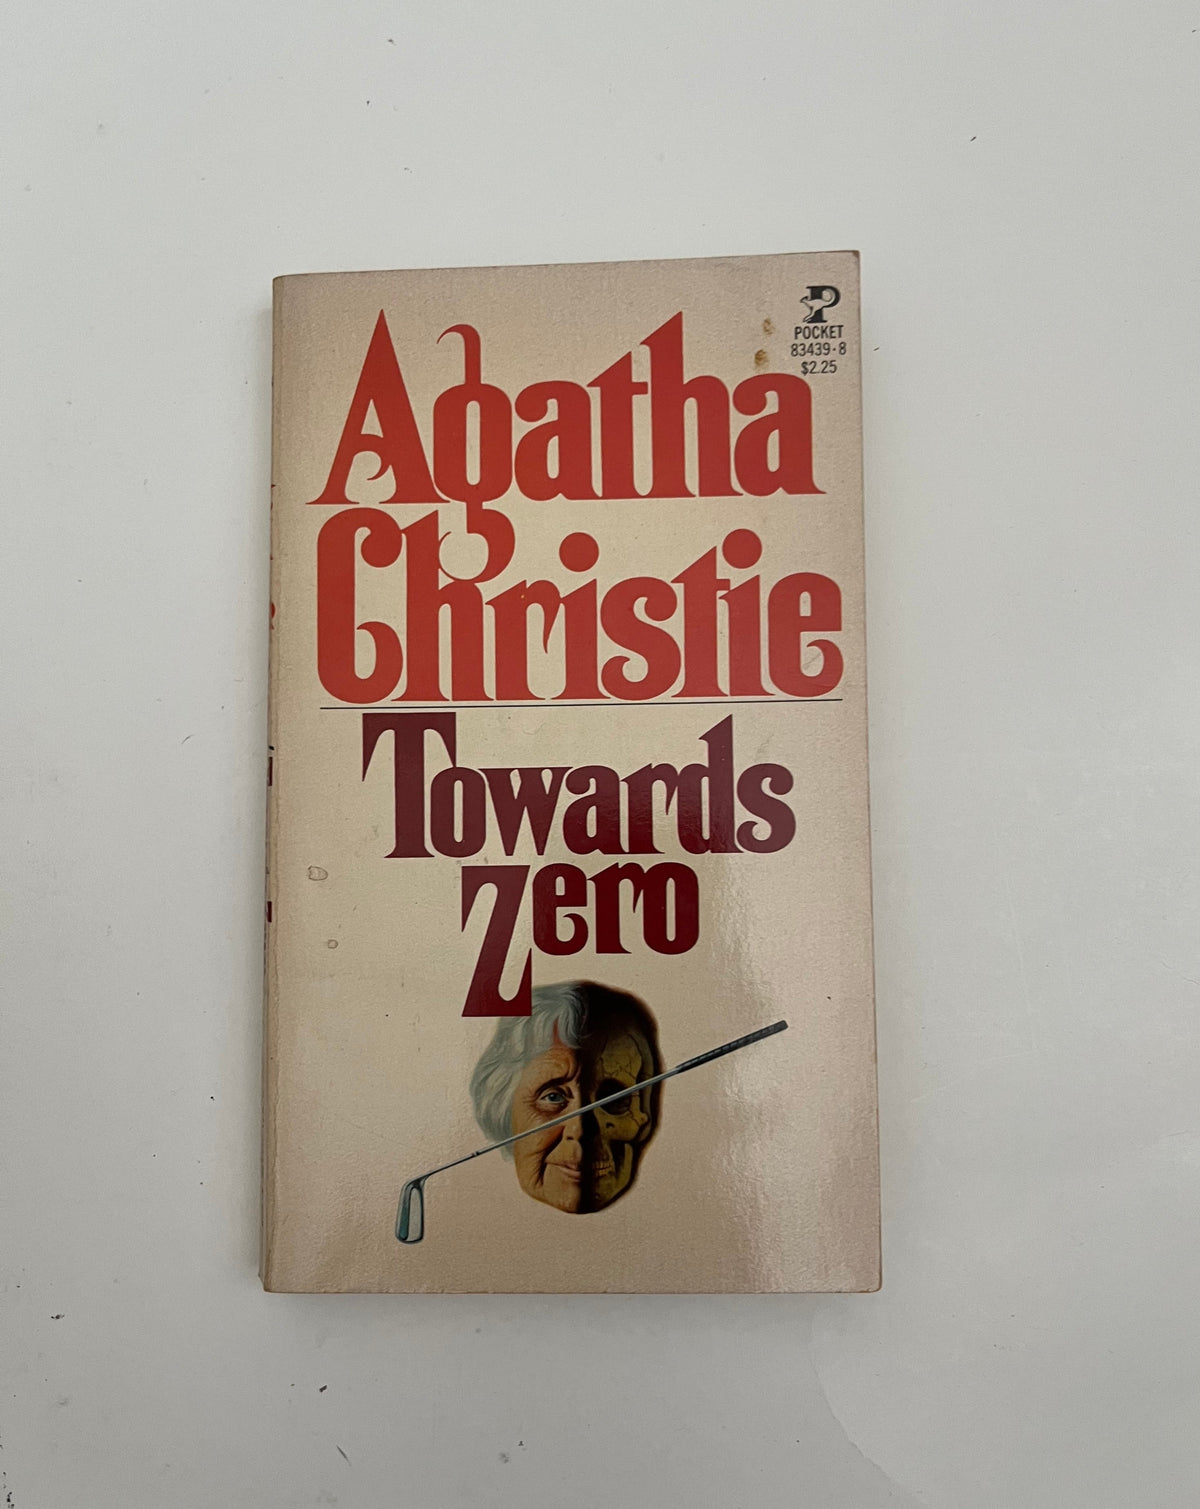 Towards Zero by Agatha Christie